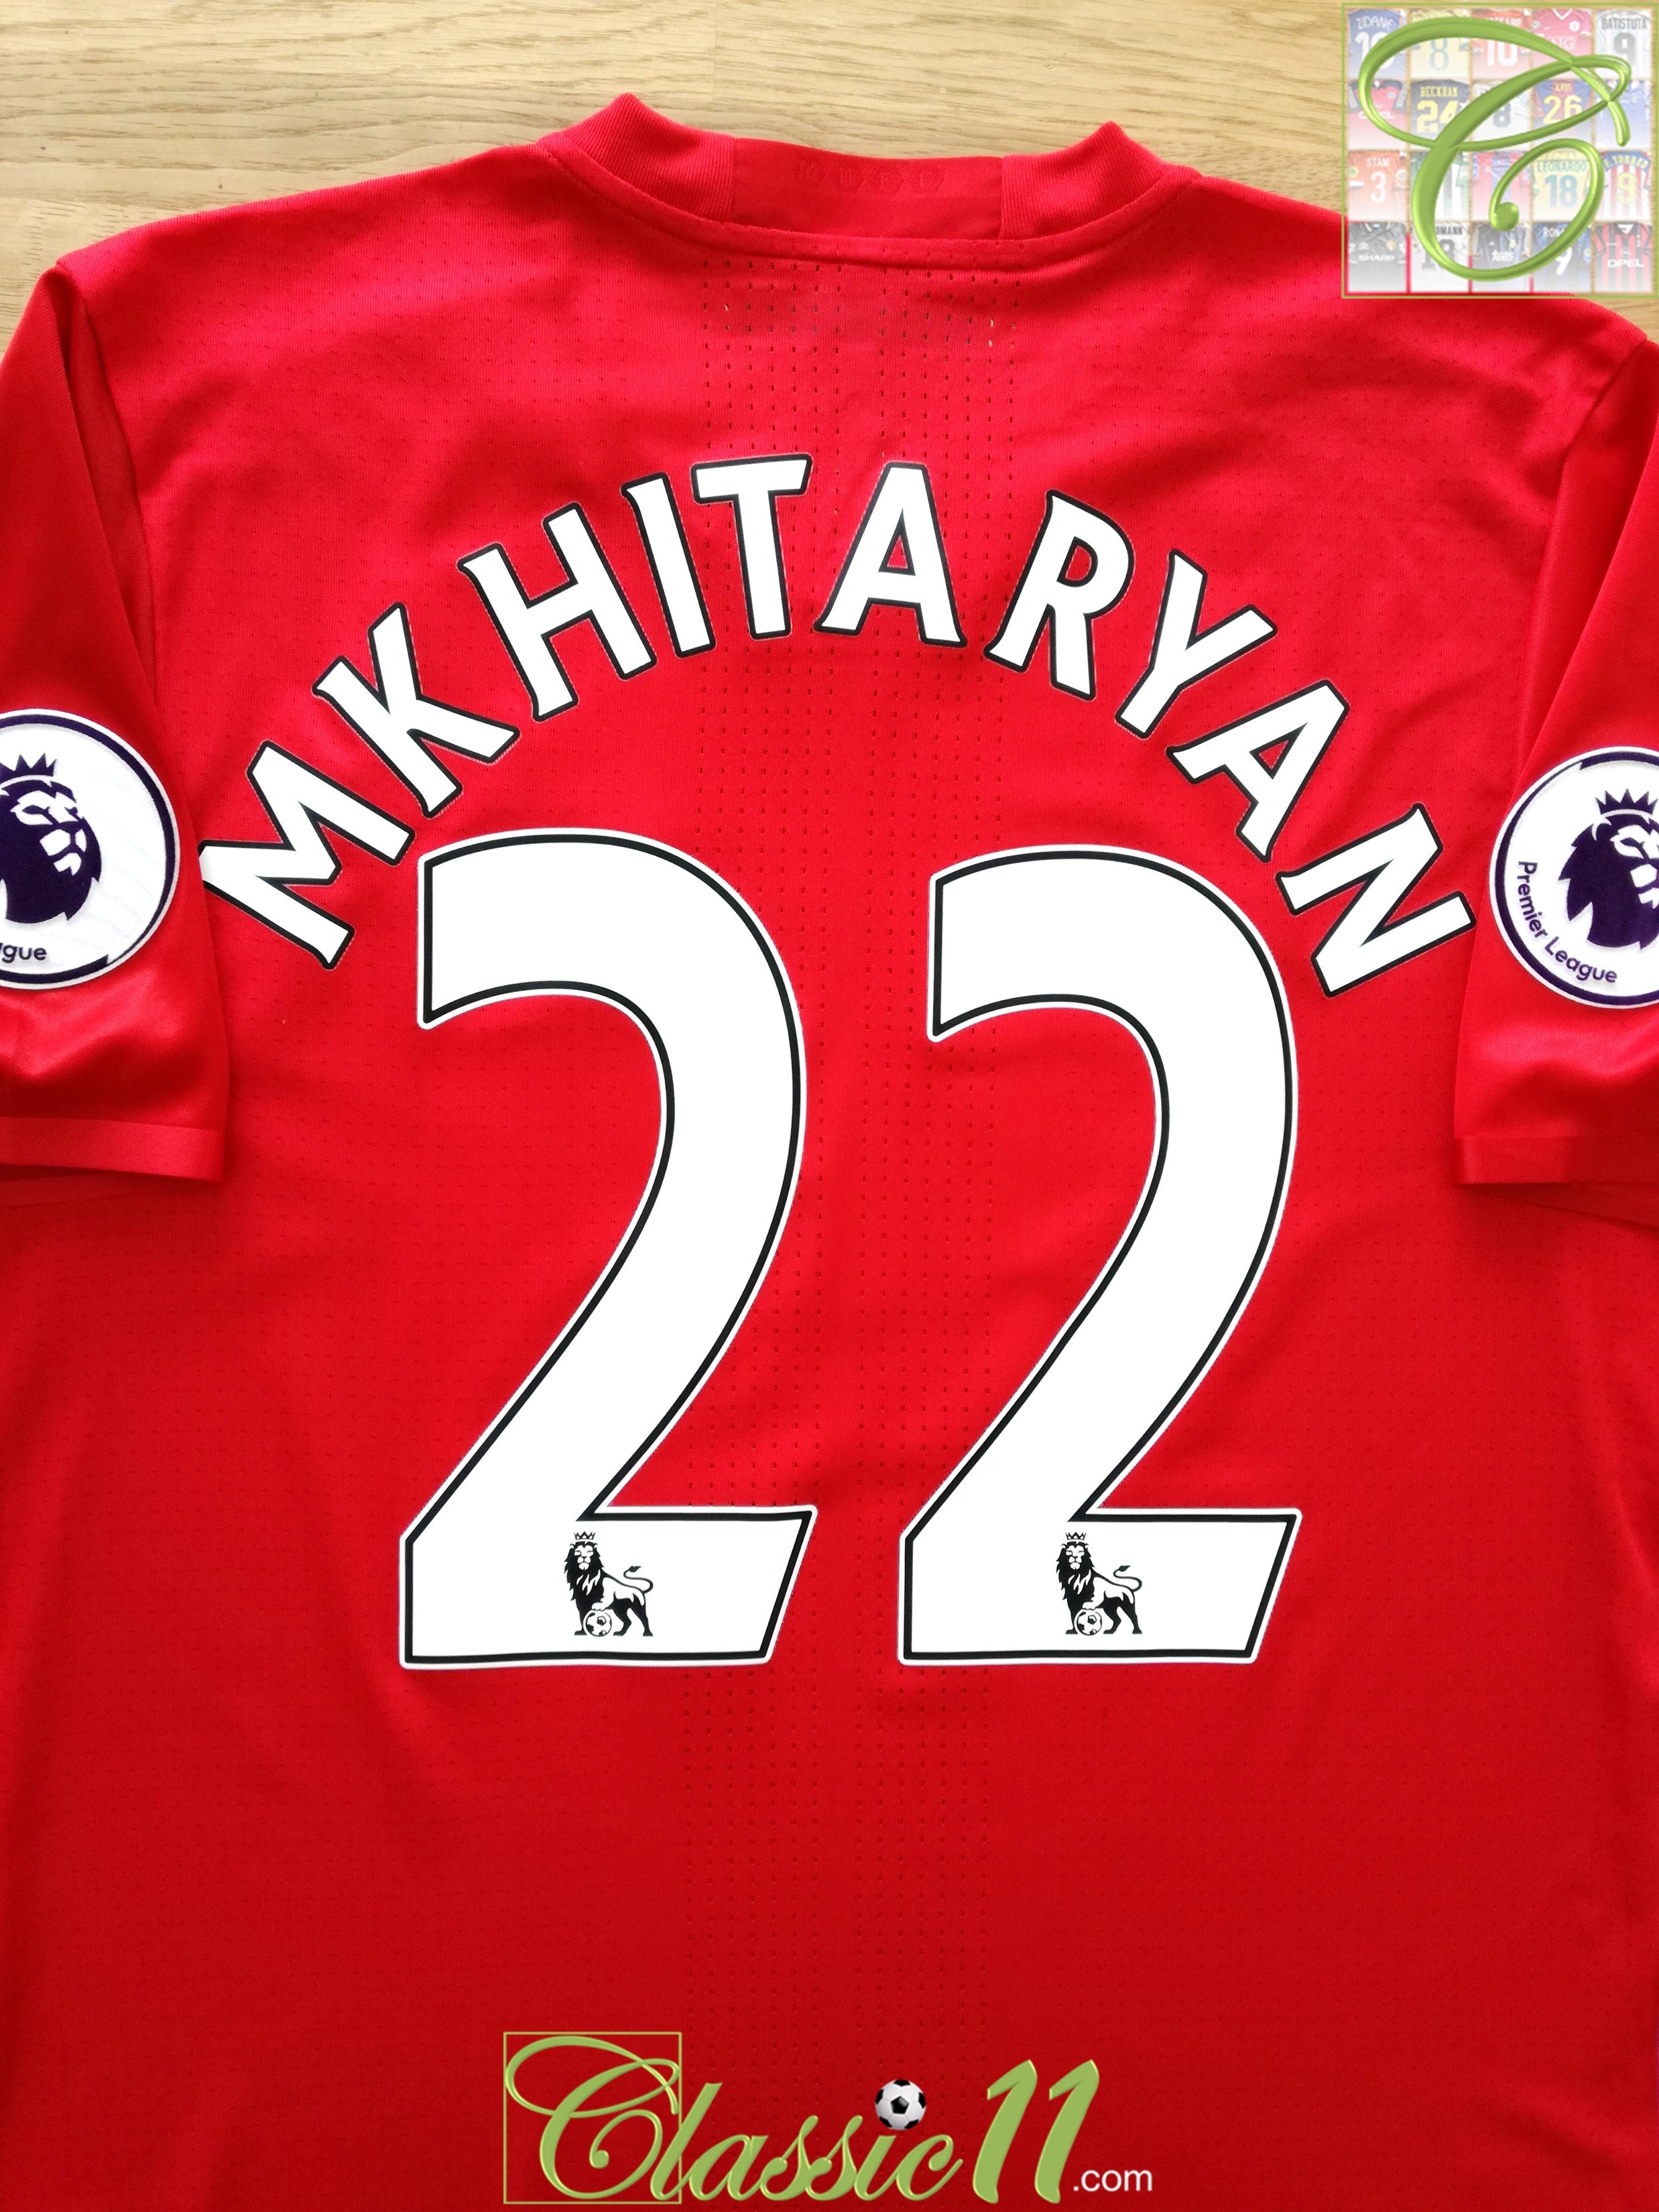 Soccerstarz Manchester United Henrikh Mkhitaryan - rouge/blanc - TU -  Cdiscount Sport